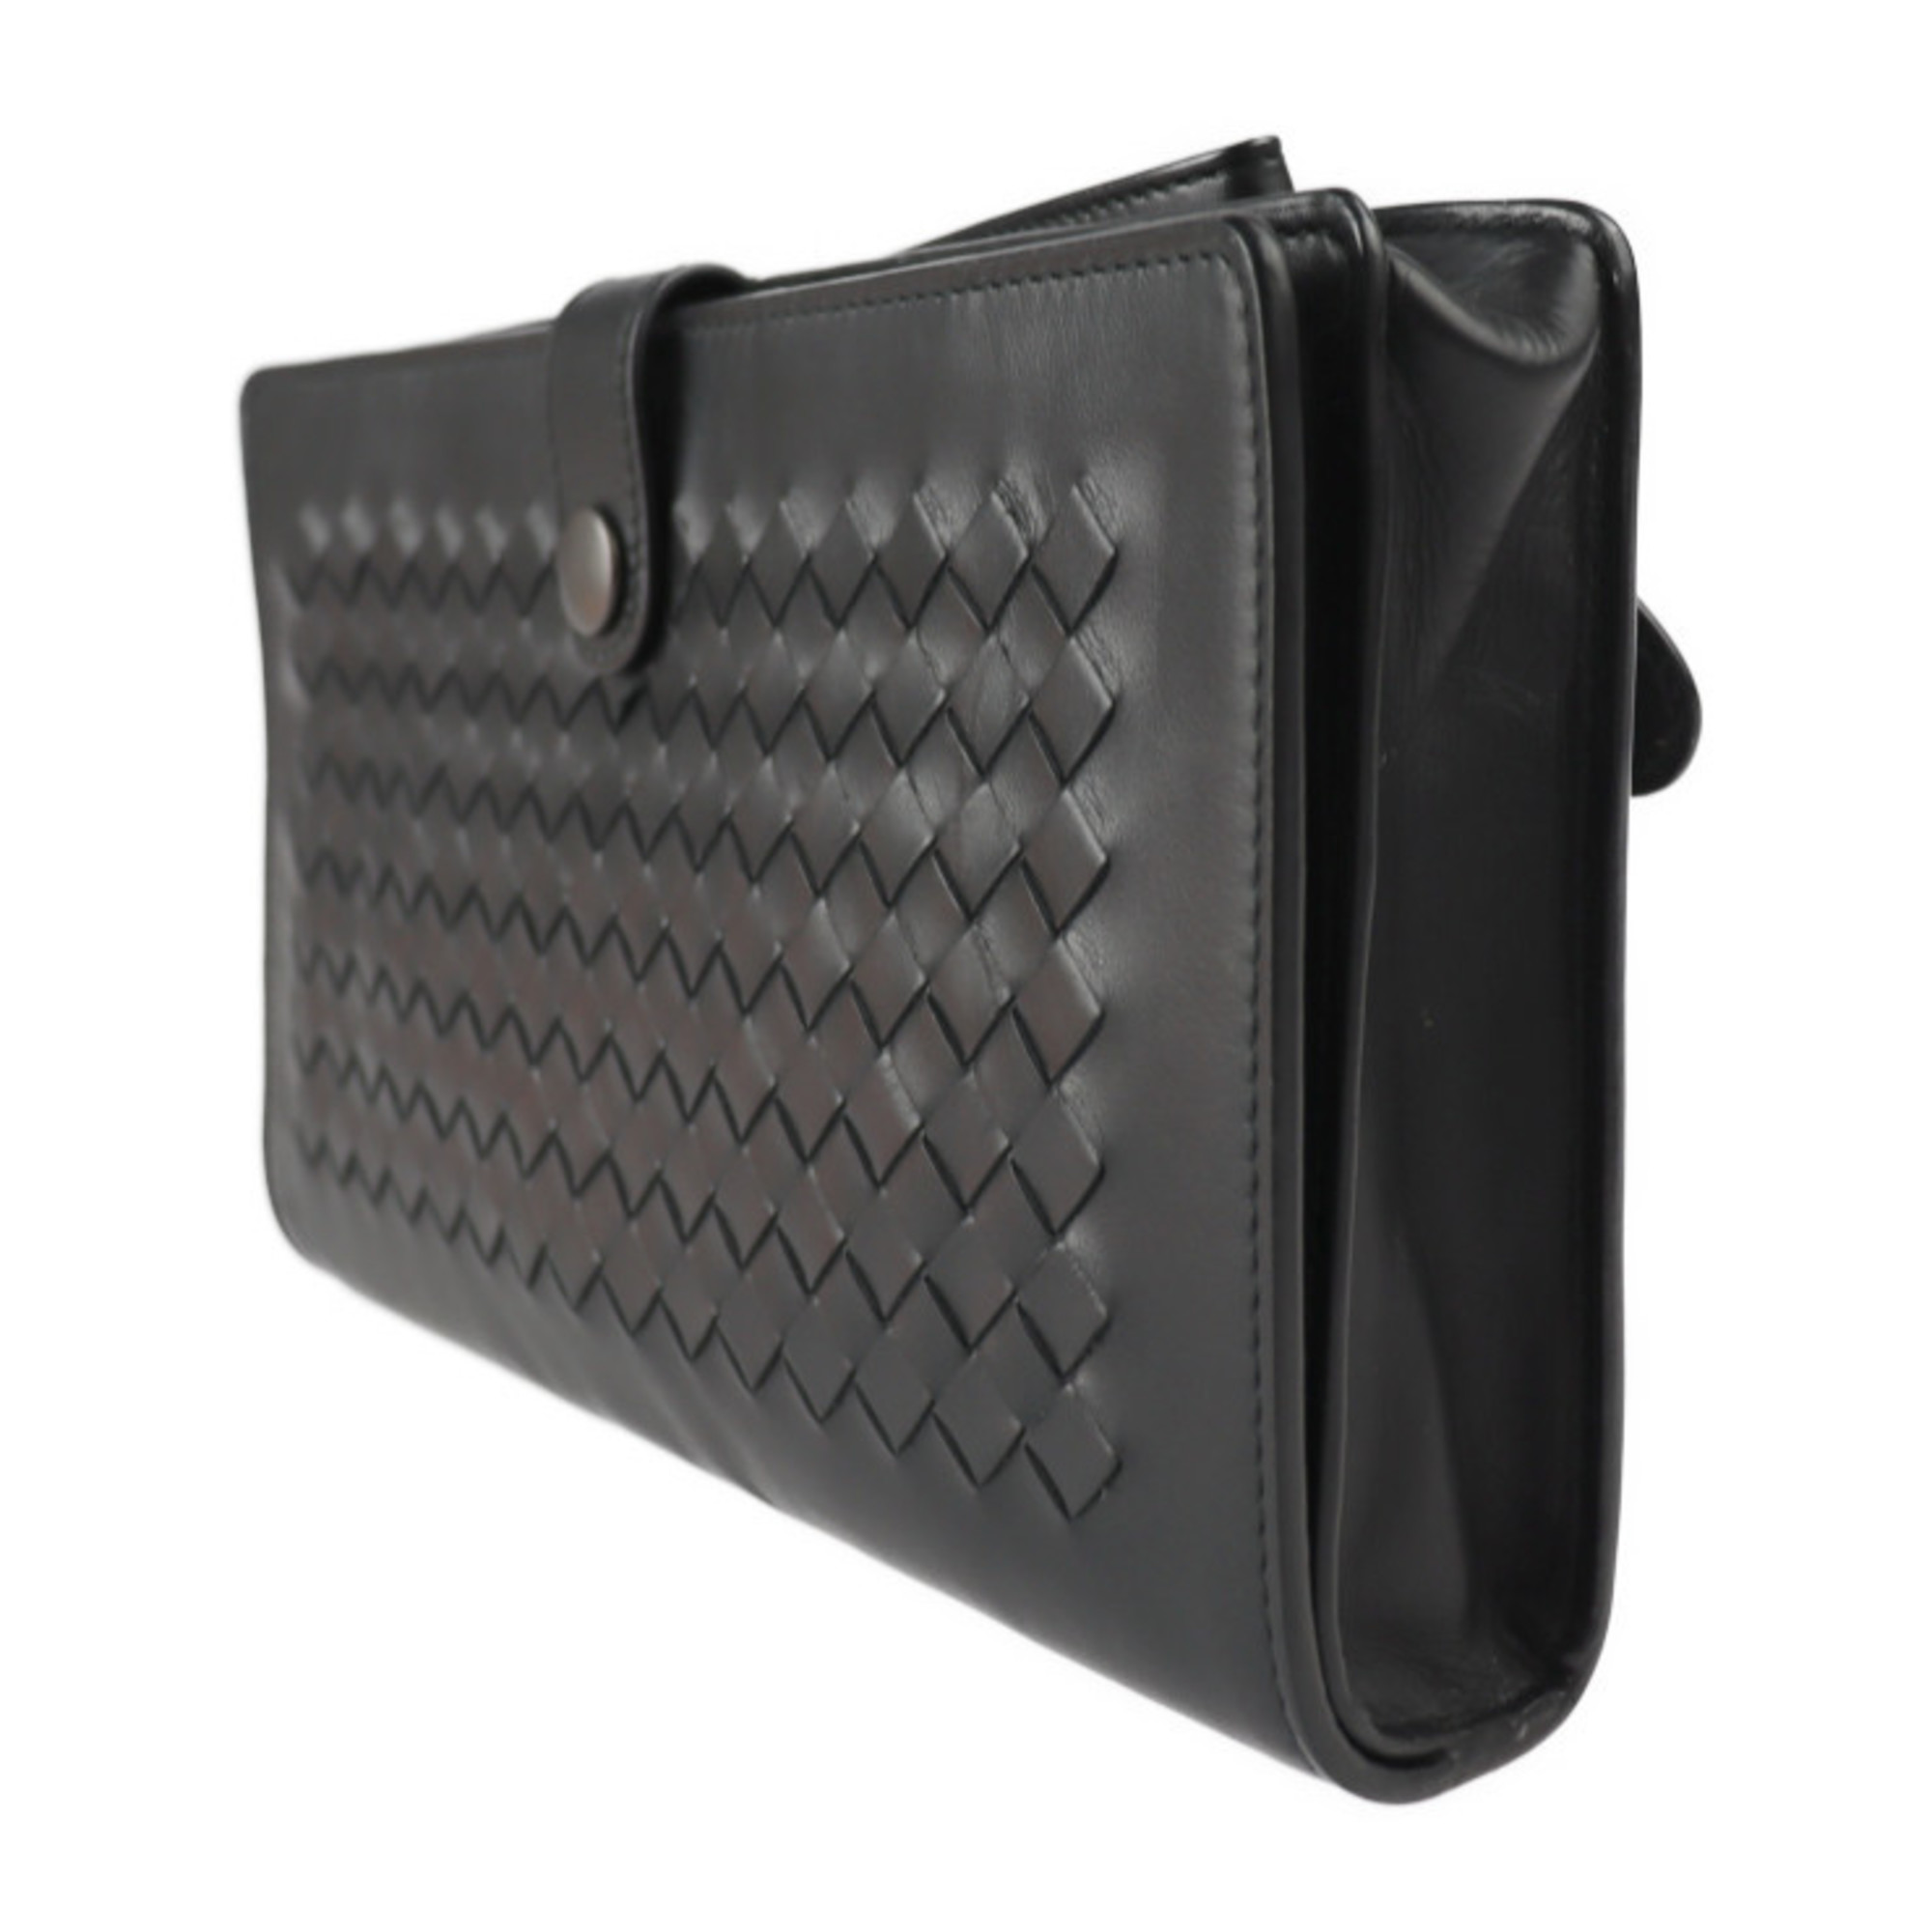 BOTTEGA VENETA Continental Wallet Intrecciato Second Bag 302652 Calf Leather Black Clutch Purse Multi Case